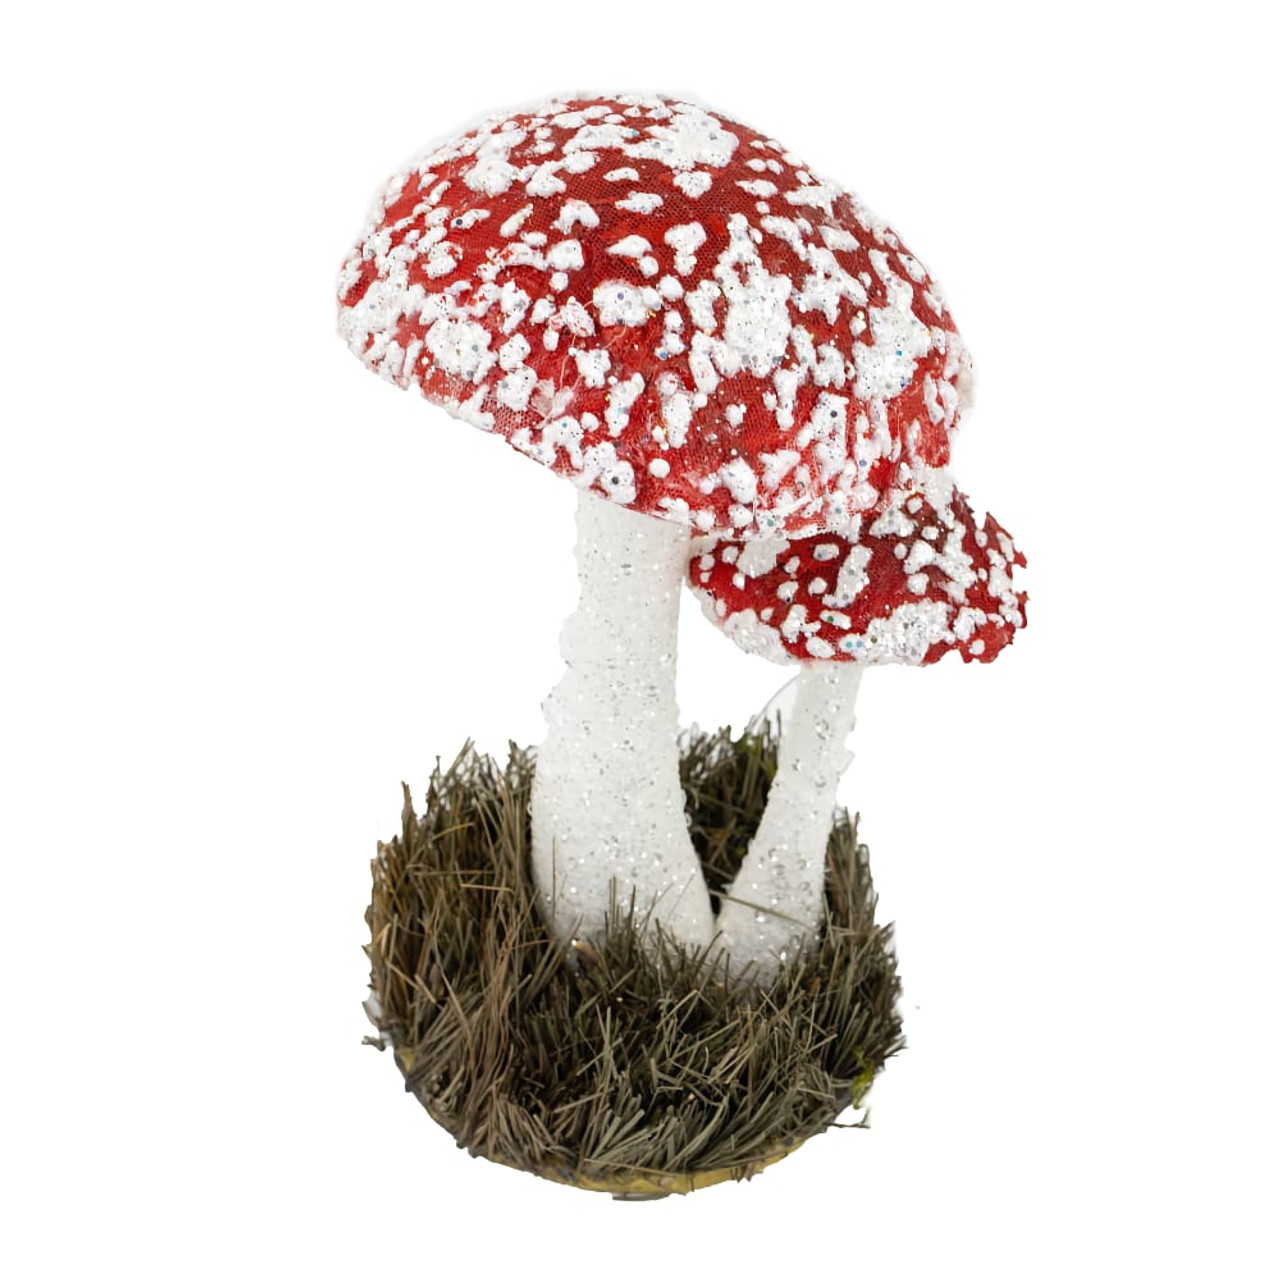 Red & White Spotted Mushroom 22cm